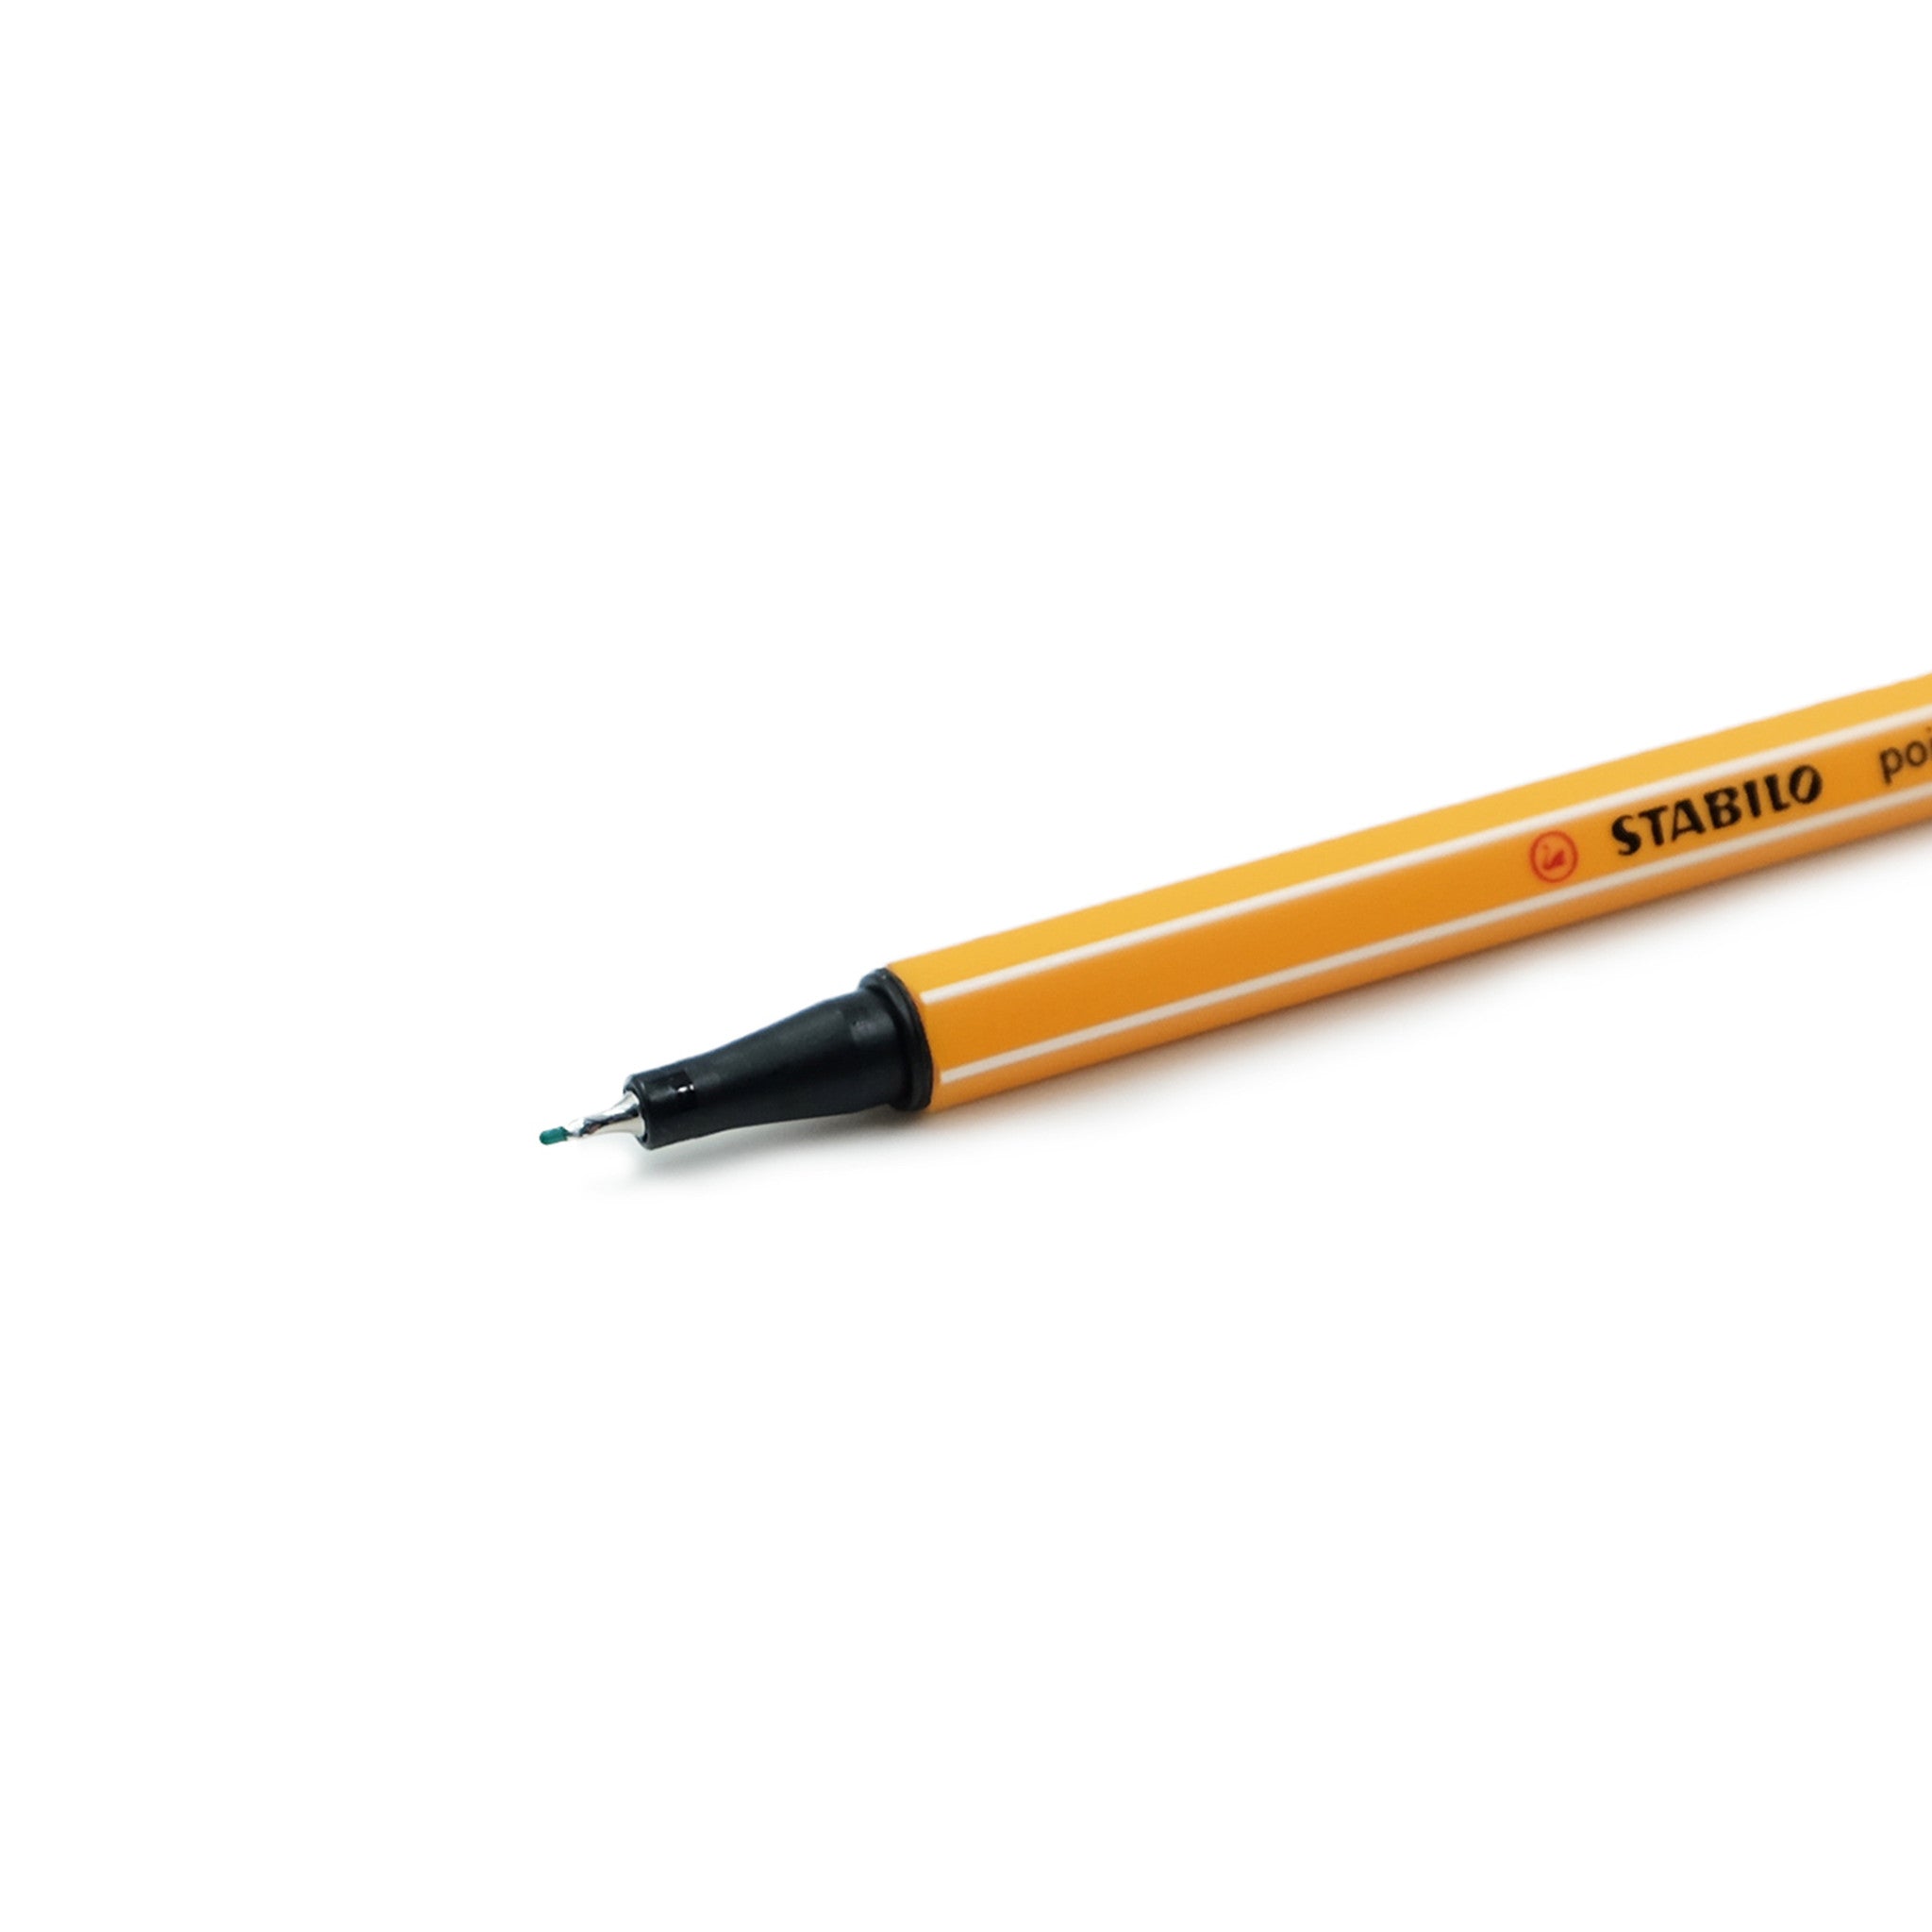 Stabilo 88, Fineliner Pen Art Department LLC